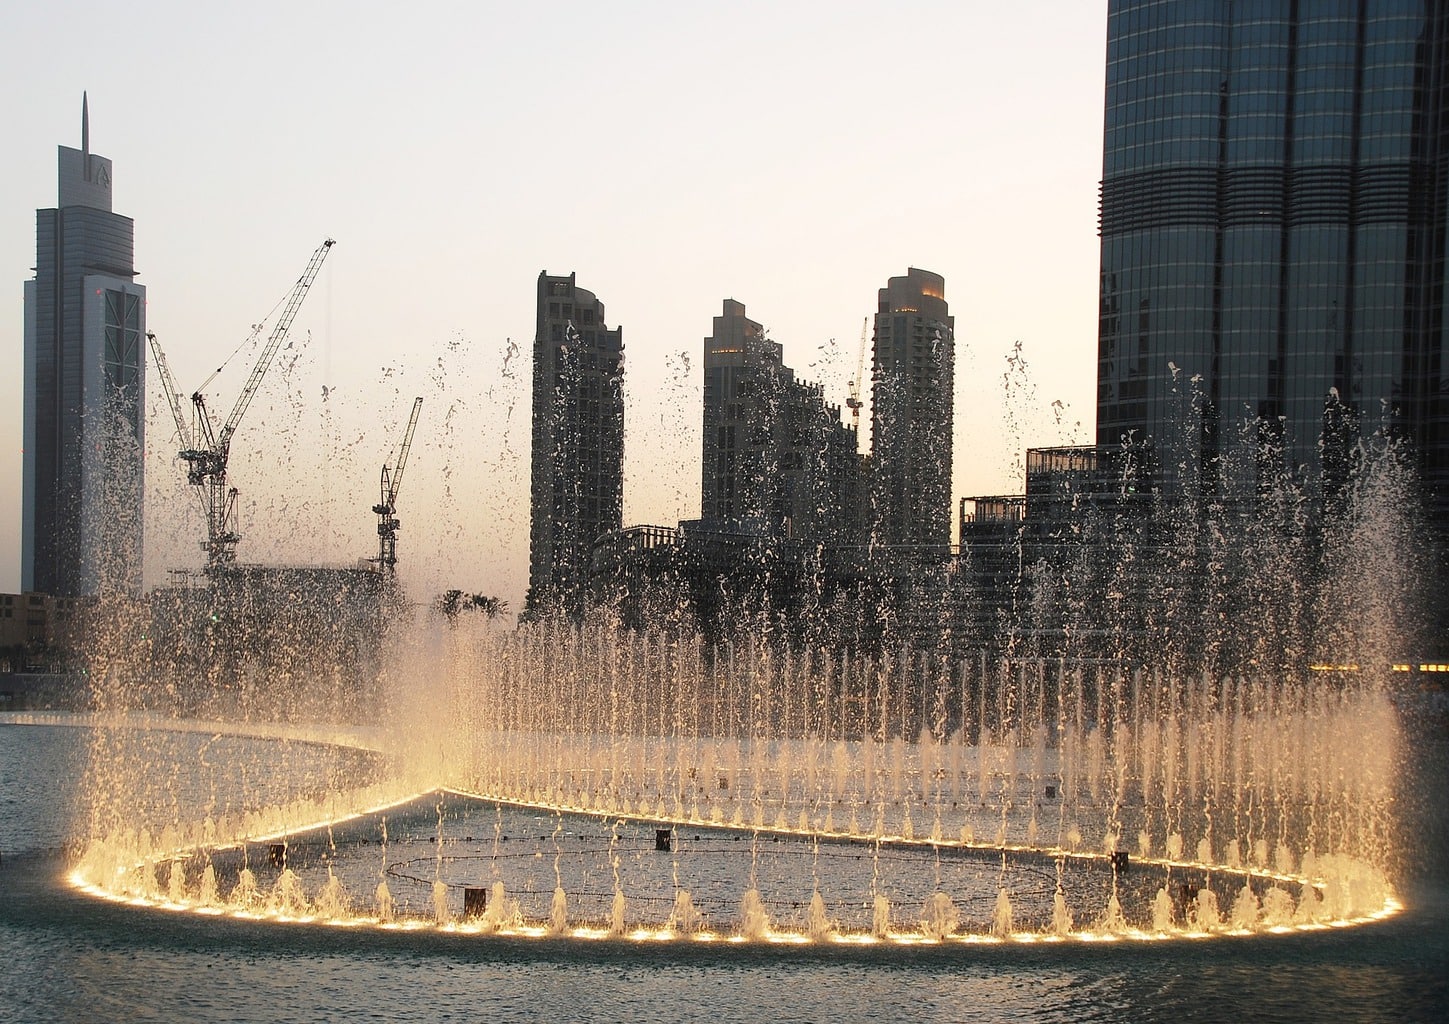 Dubai Mall Fountain show